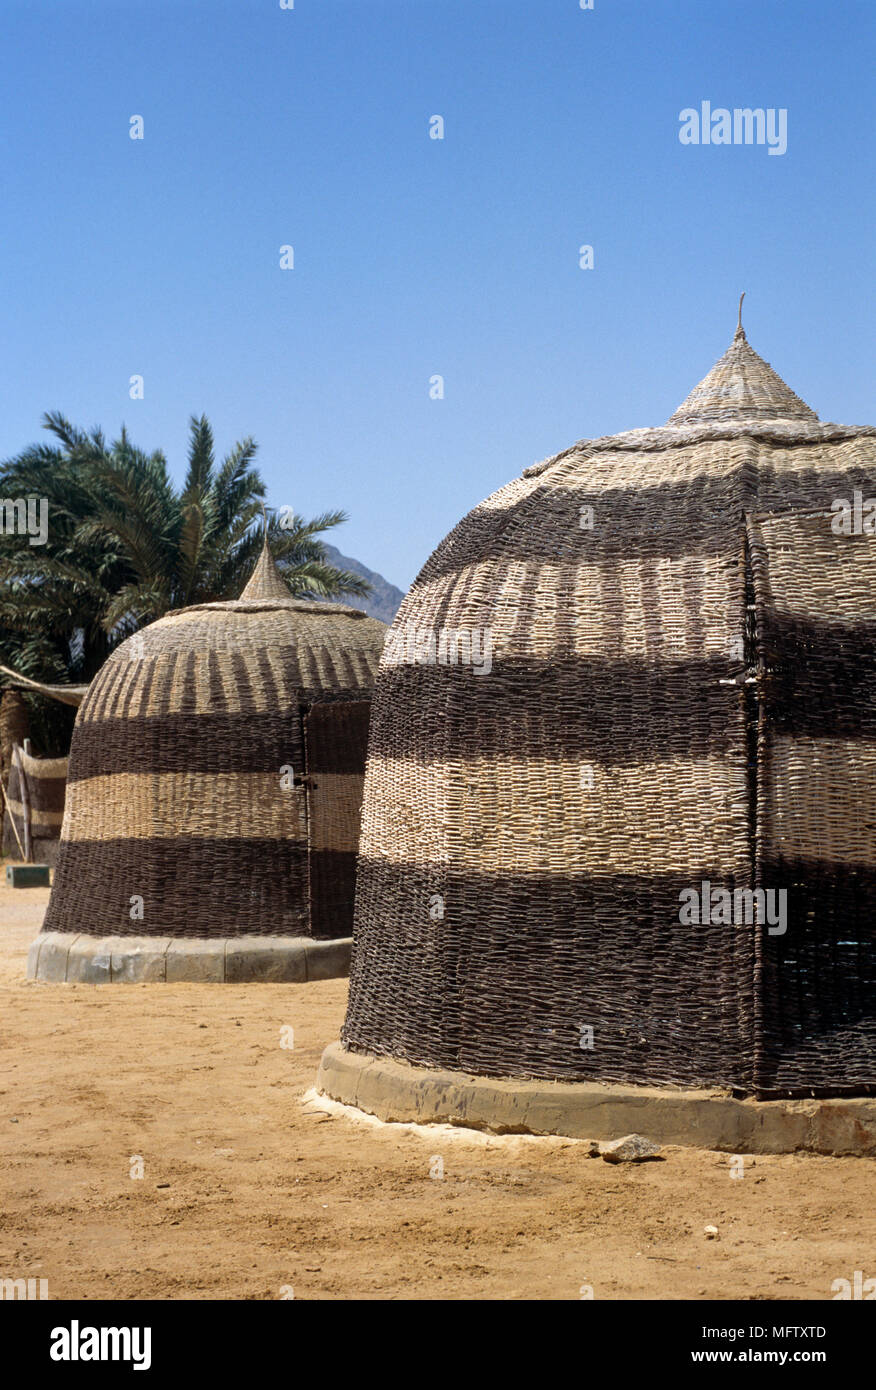 Woven wicker beach huts in Newieba Stock Photo